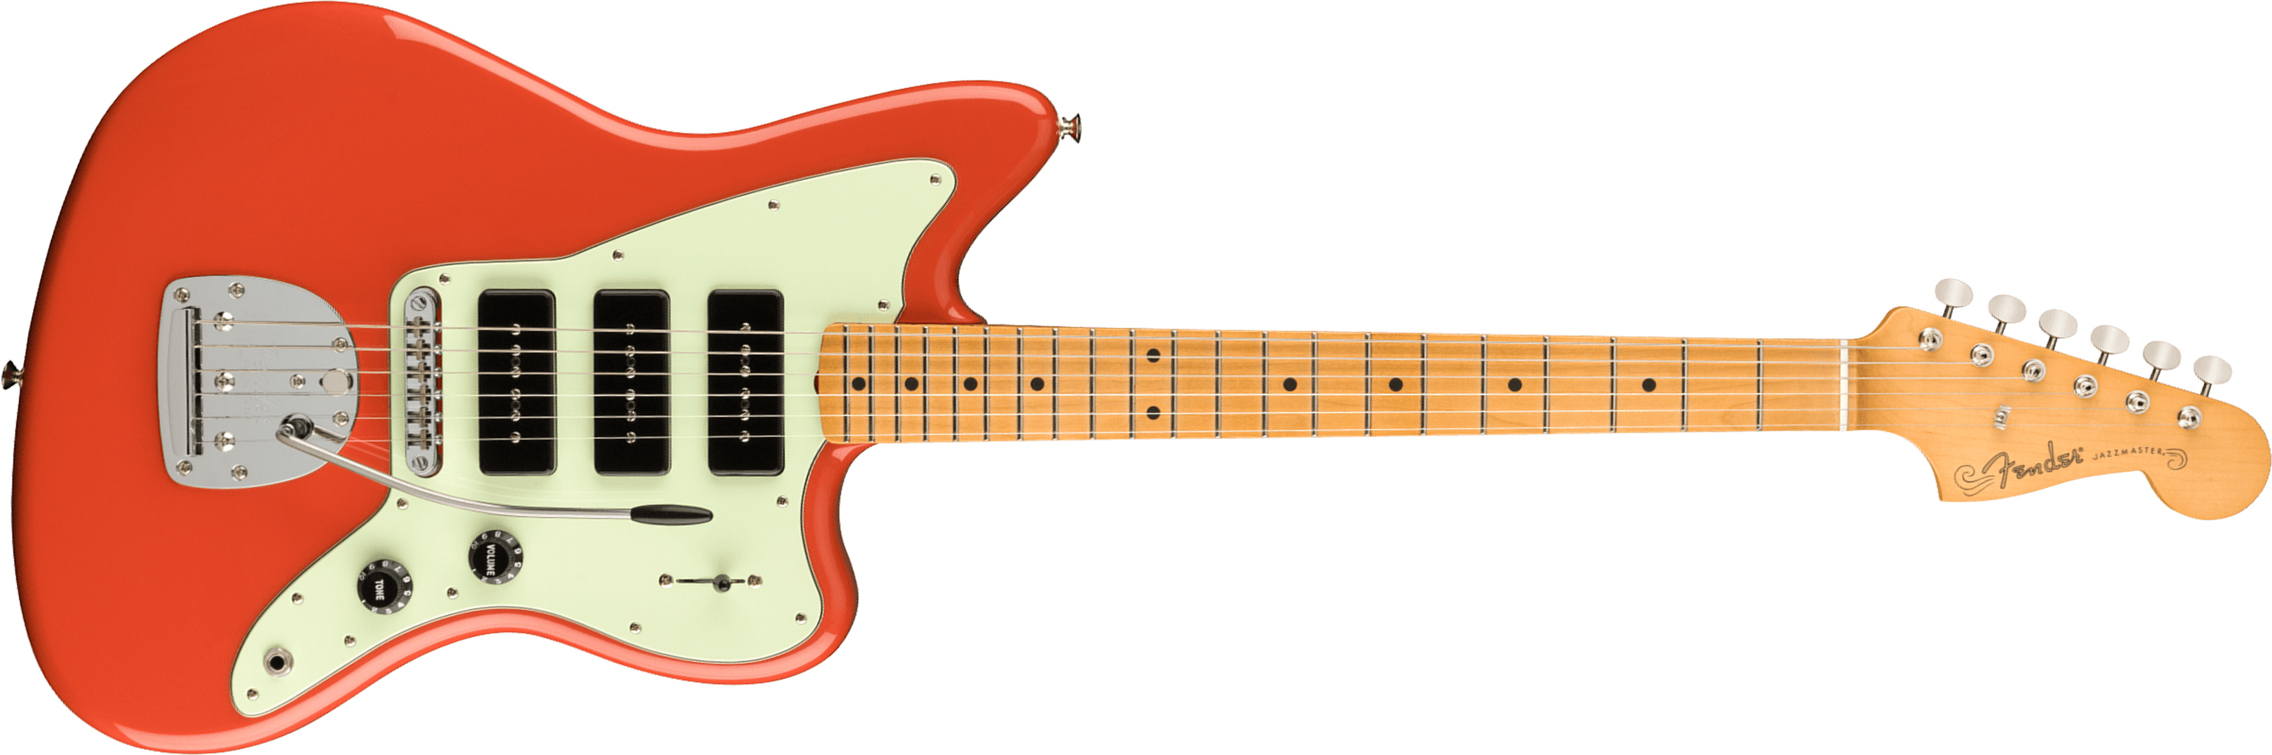 Fender Jazzmaster Noventa Mex Sss Mn +housse - Fiesta Red - Retro rock electric guitar - Main picture